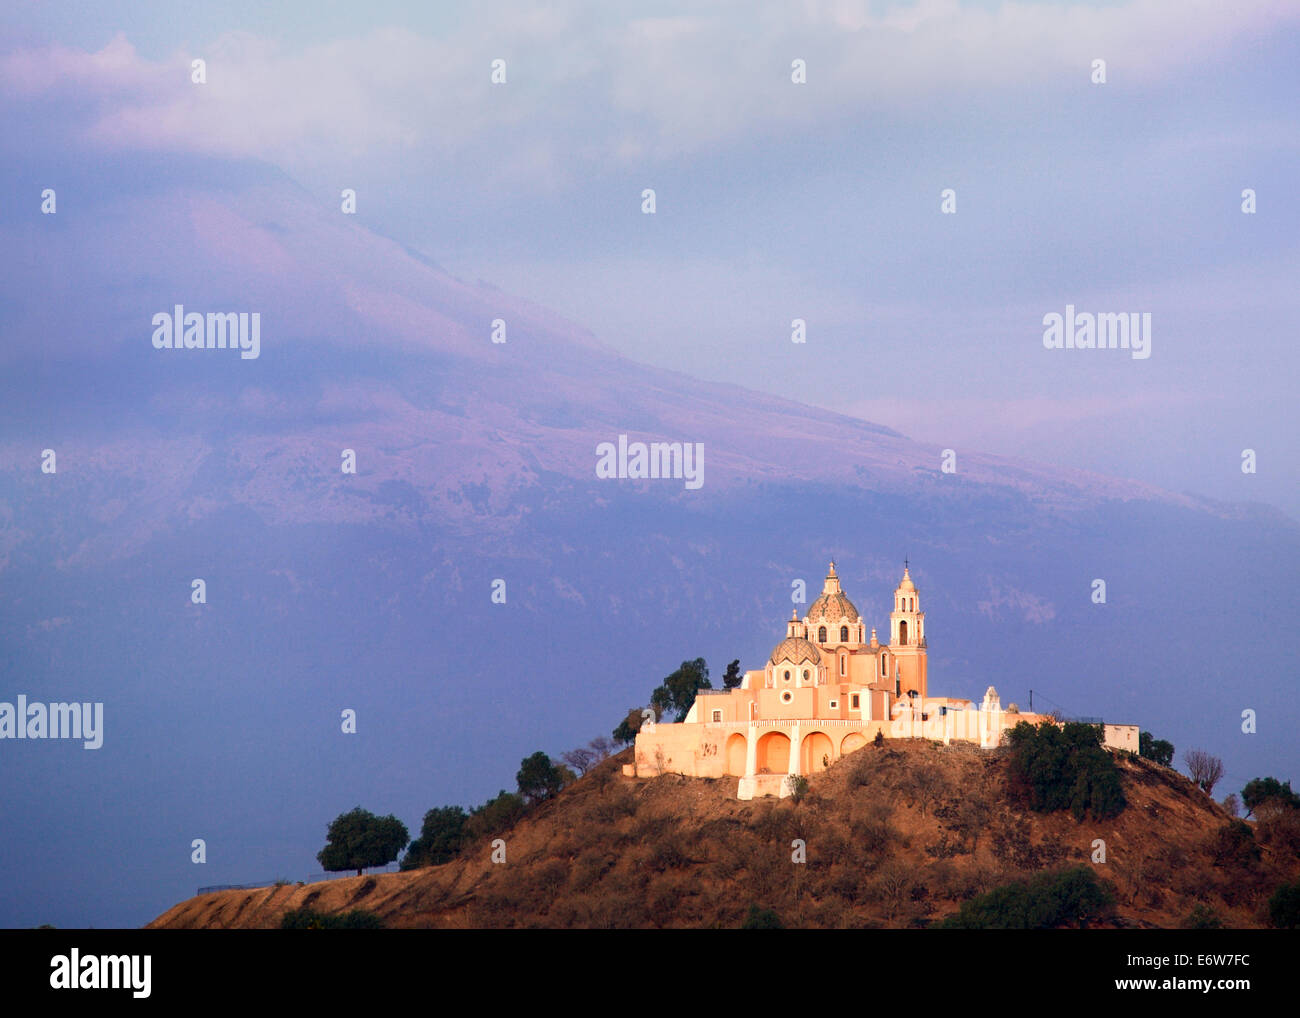 La seicentesca chiesa di Nuestra Señora de los Remedios in Cholula, Messico con il vulcano Popocatepetl in background. Foto Stock